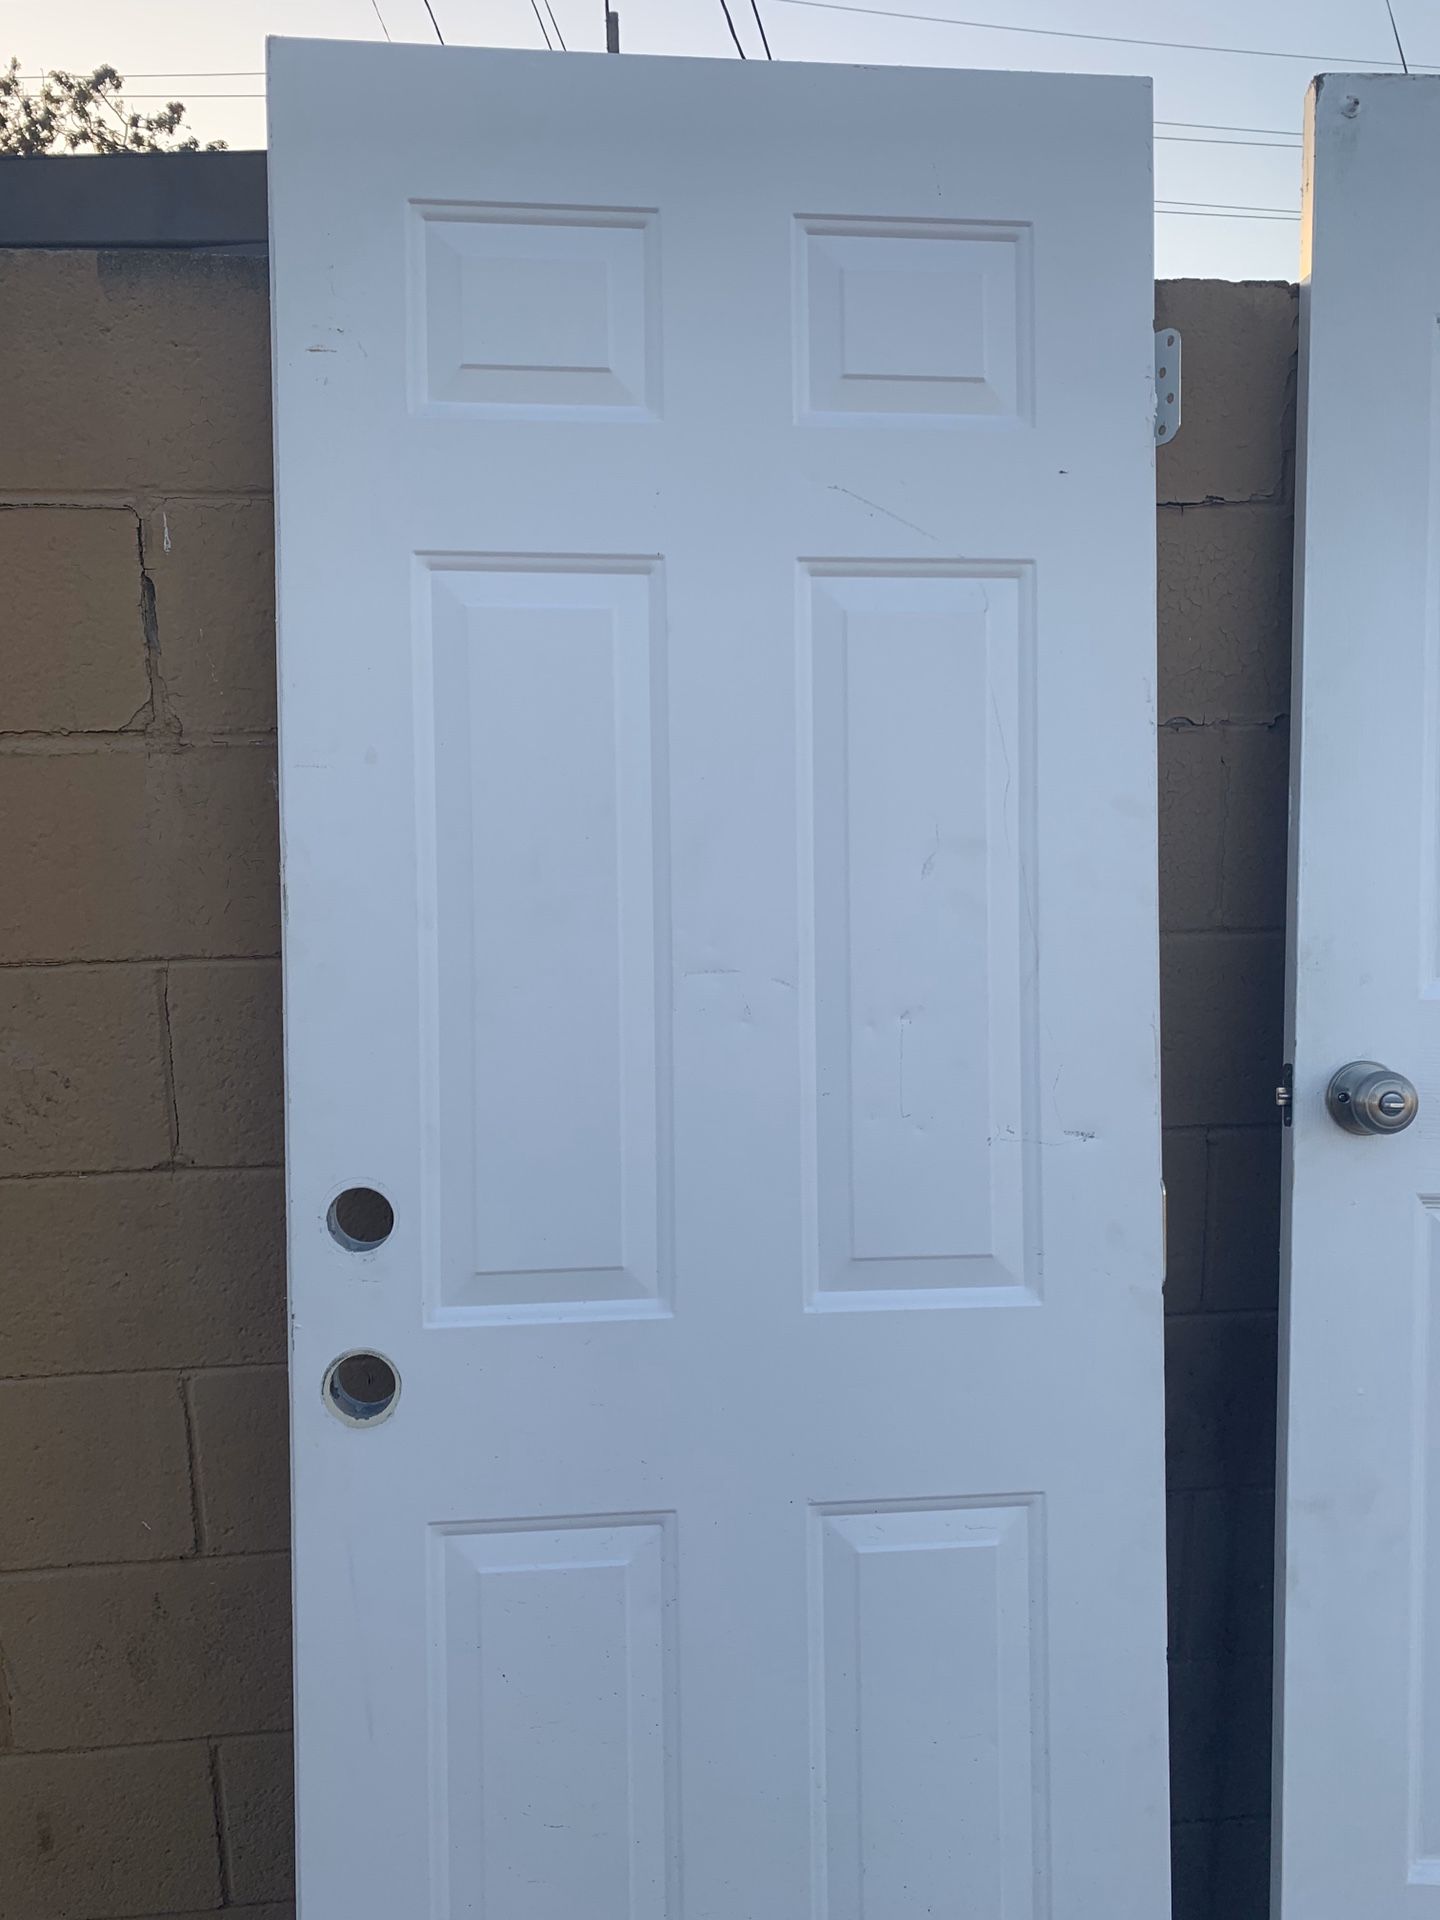 House doors